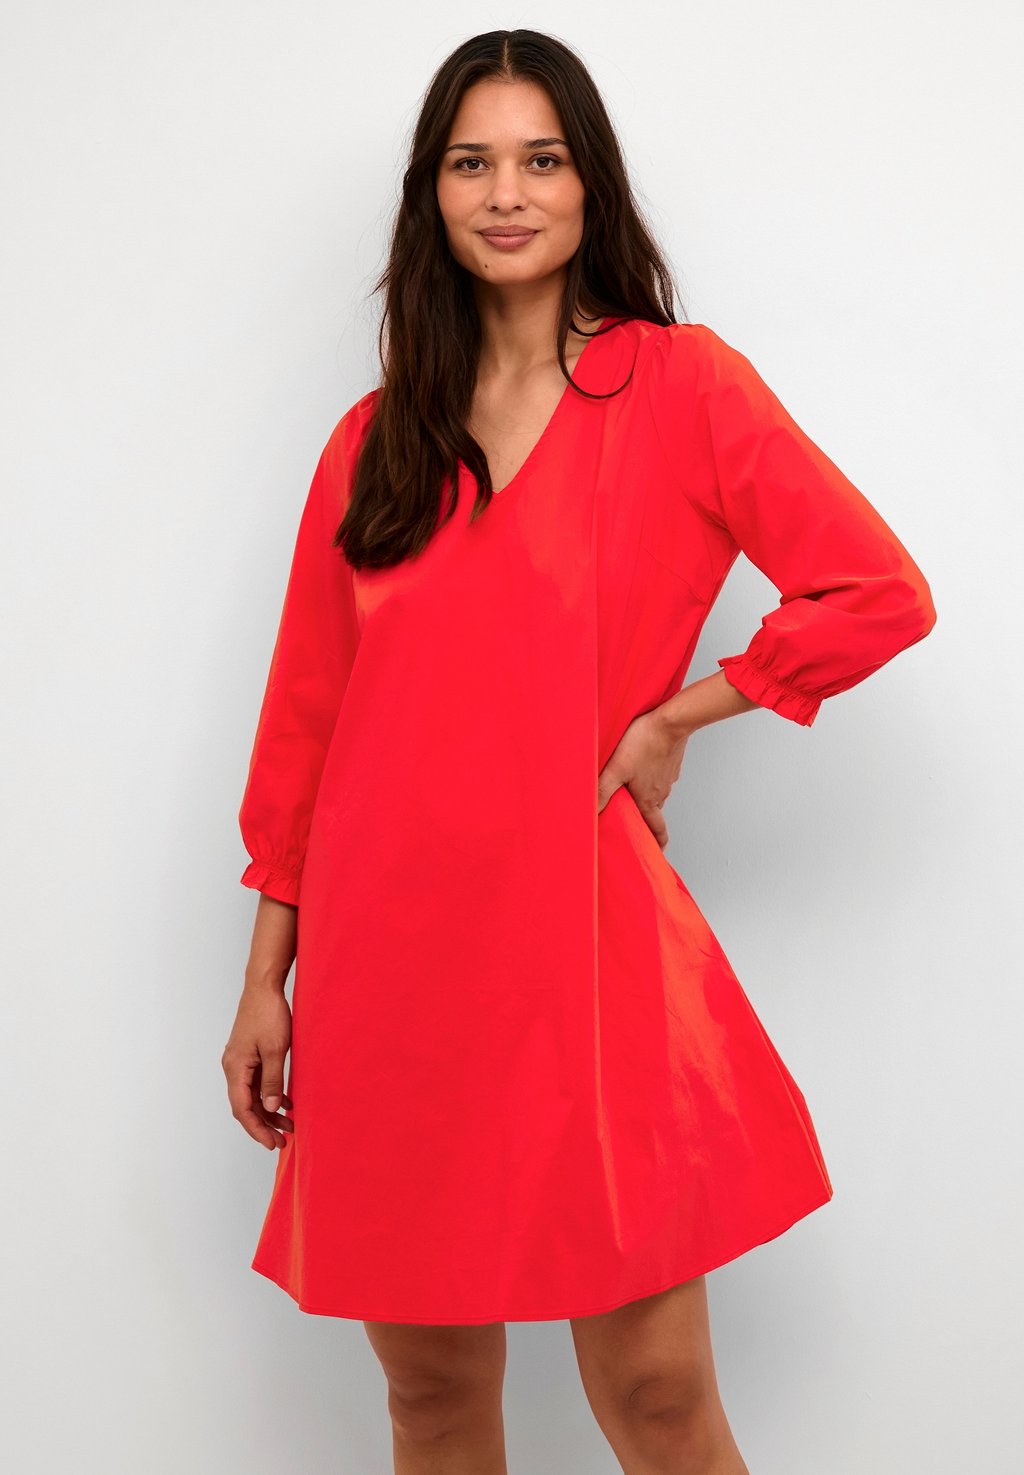 Дневное платье CUANTOINETT SHORT 3/4 SLEEVE Culture, цвет fiery red